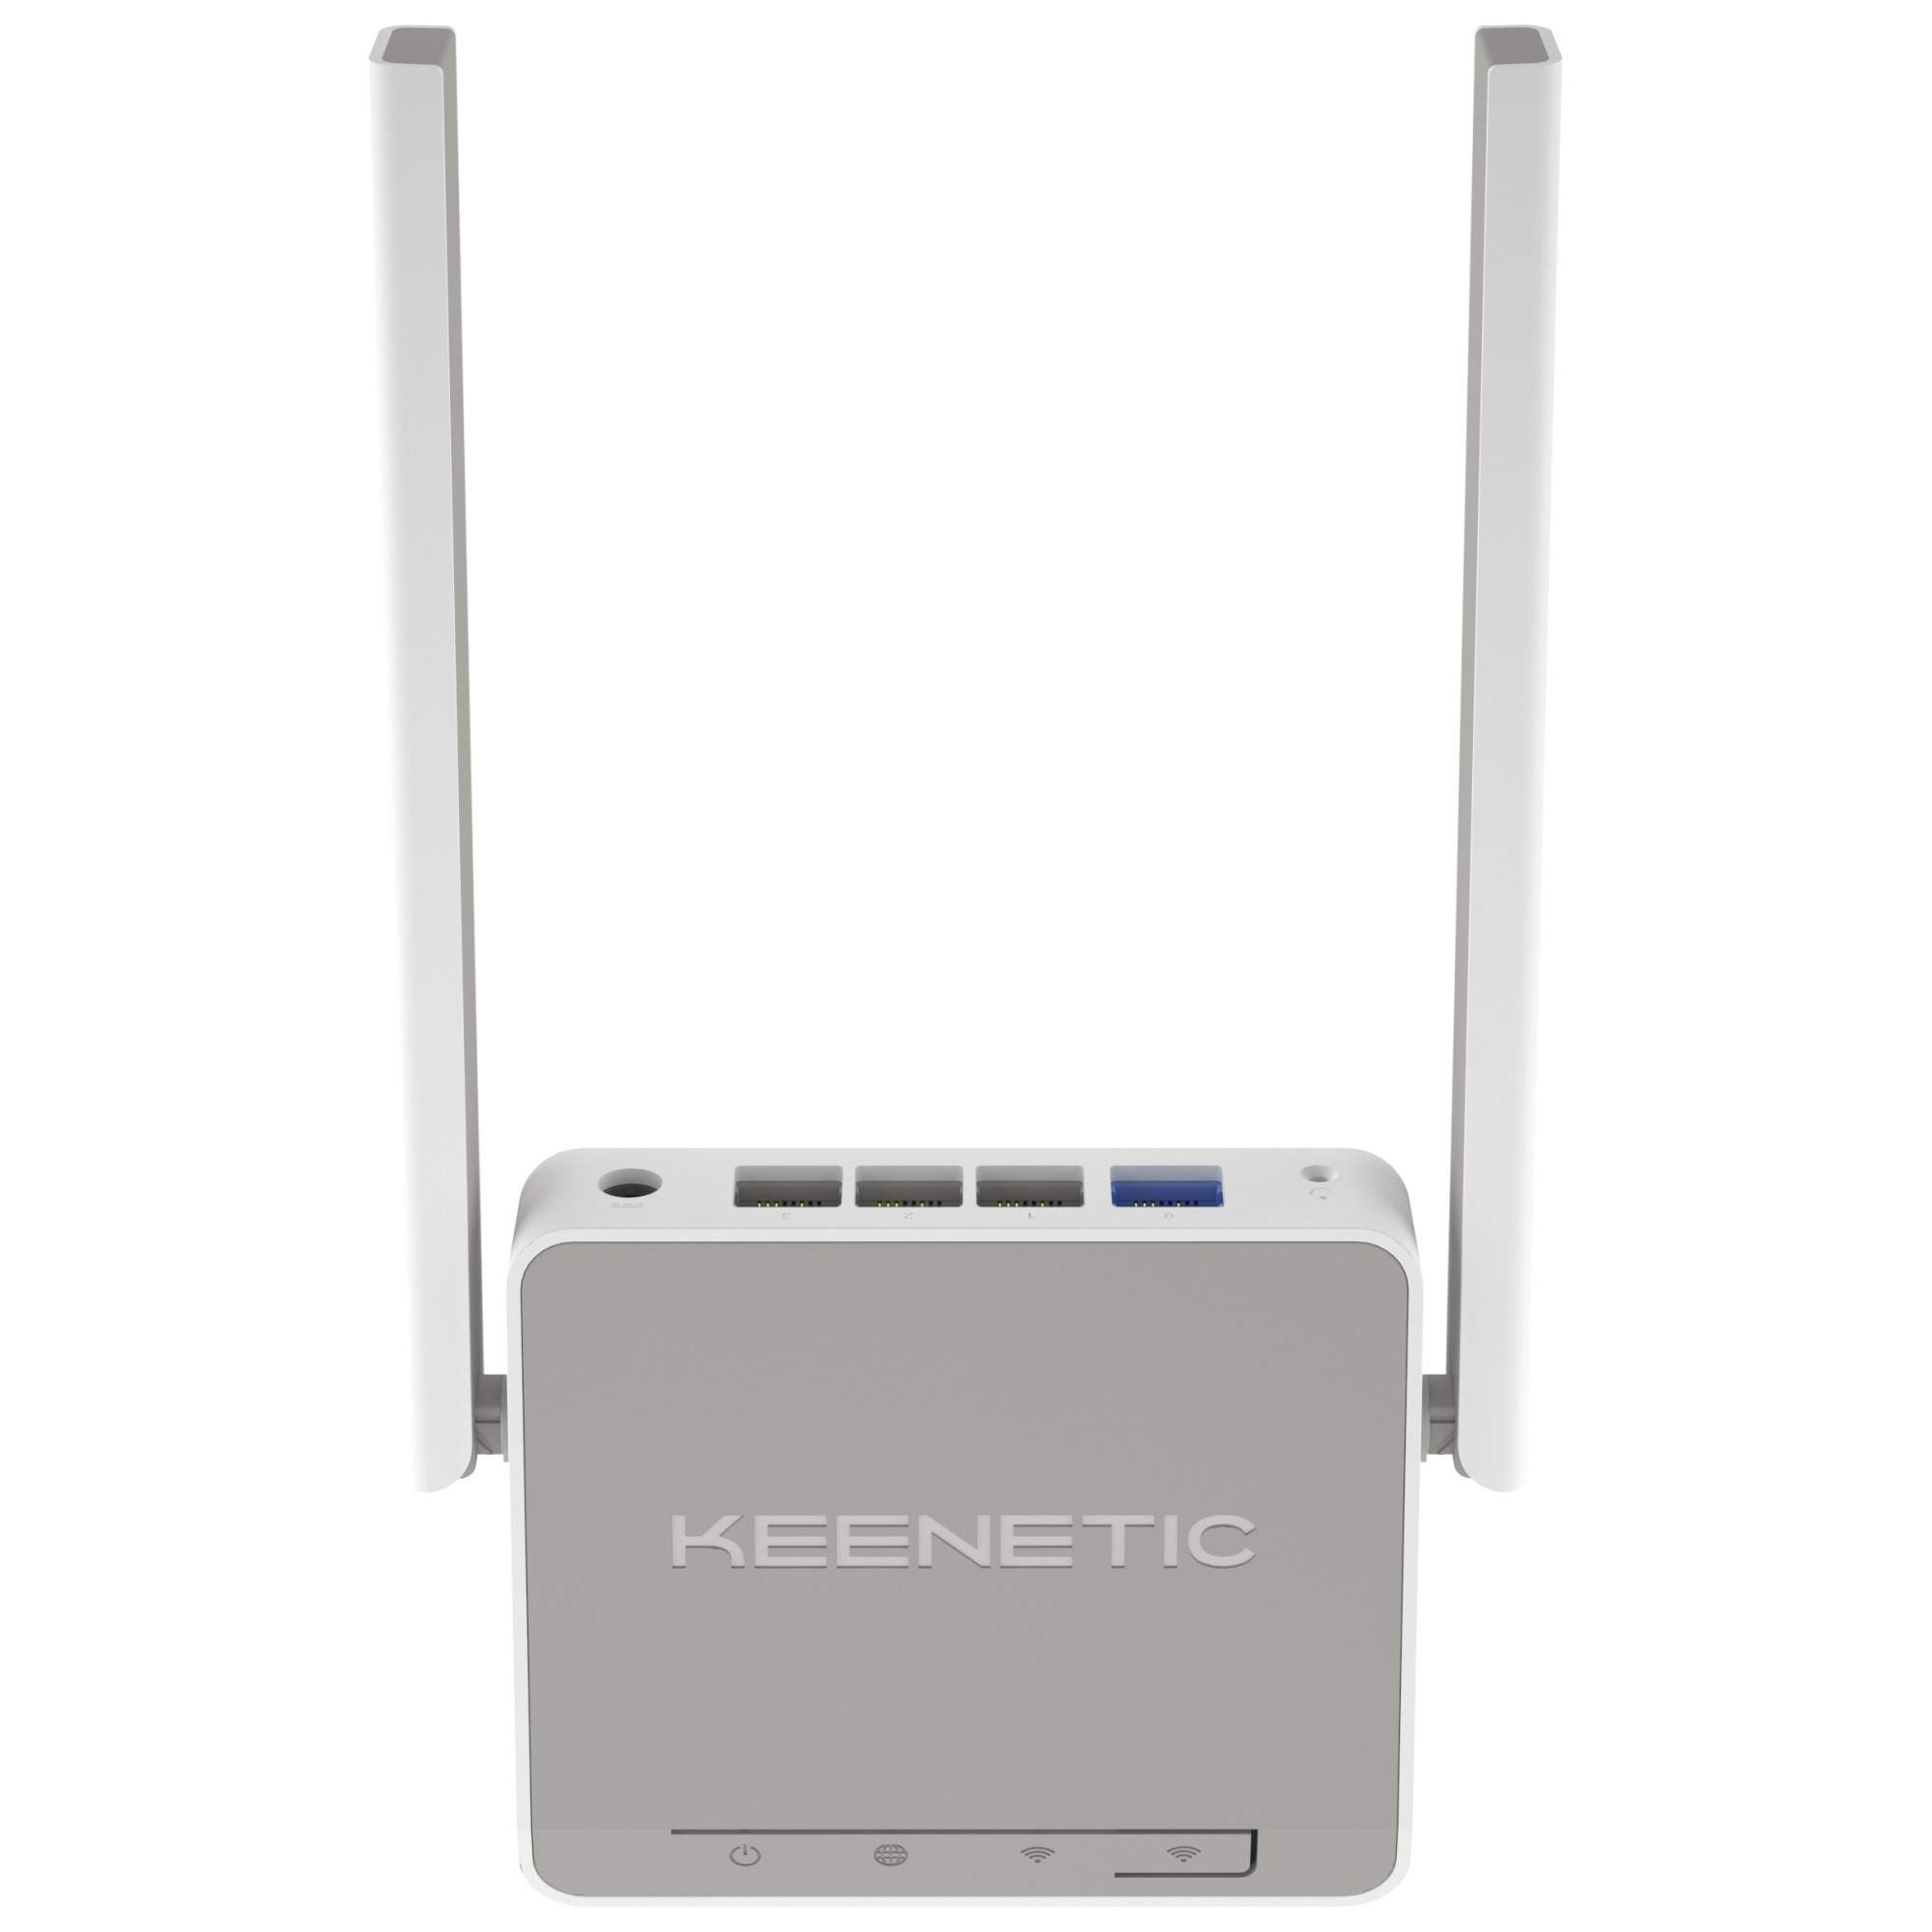 Роутер keenetic runner 4g 2211. Роутер Keenetic 4g KN-1210. Keenetic 4g KN-1211. Wi-Fi роутер Keenetic 4g n300. Wi-Fi роутер Keenetic 4g (KN-1211) White, Grey.